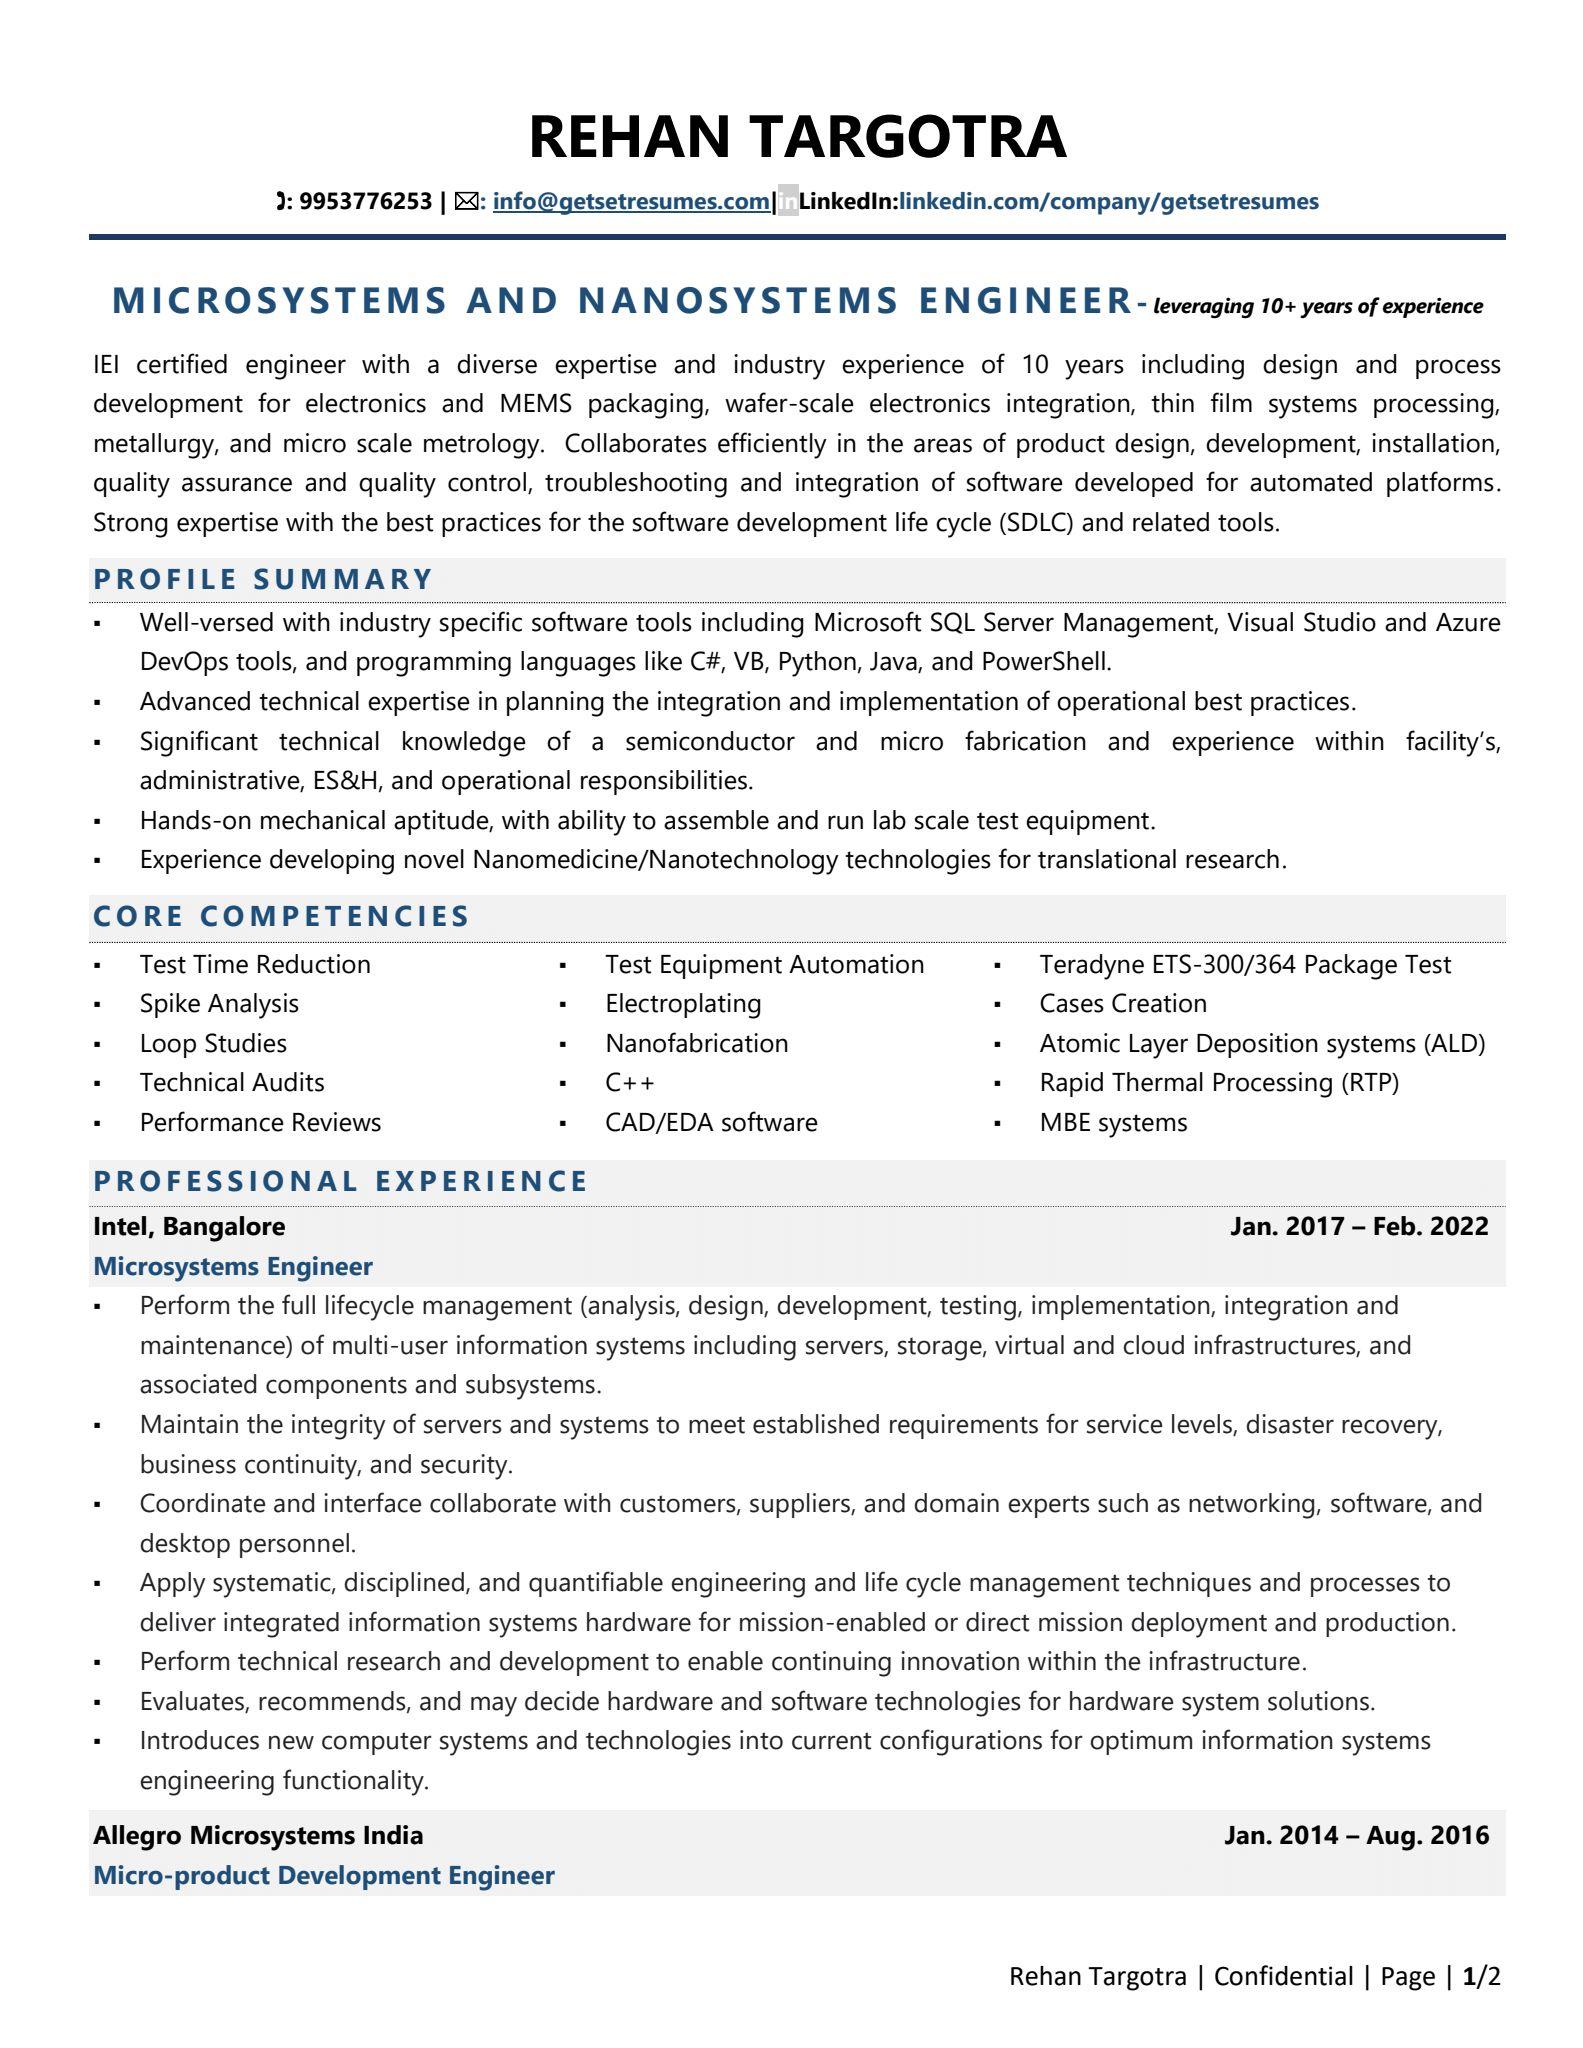 Microsystems & Nanosystems Engineer - Resume Example & Template